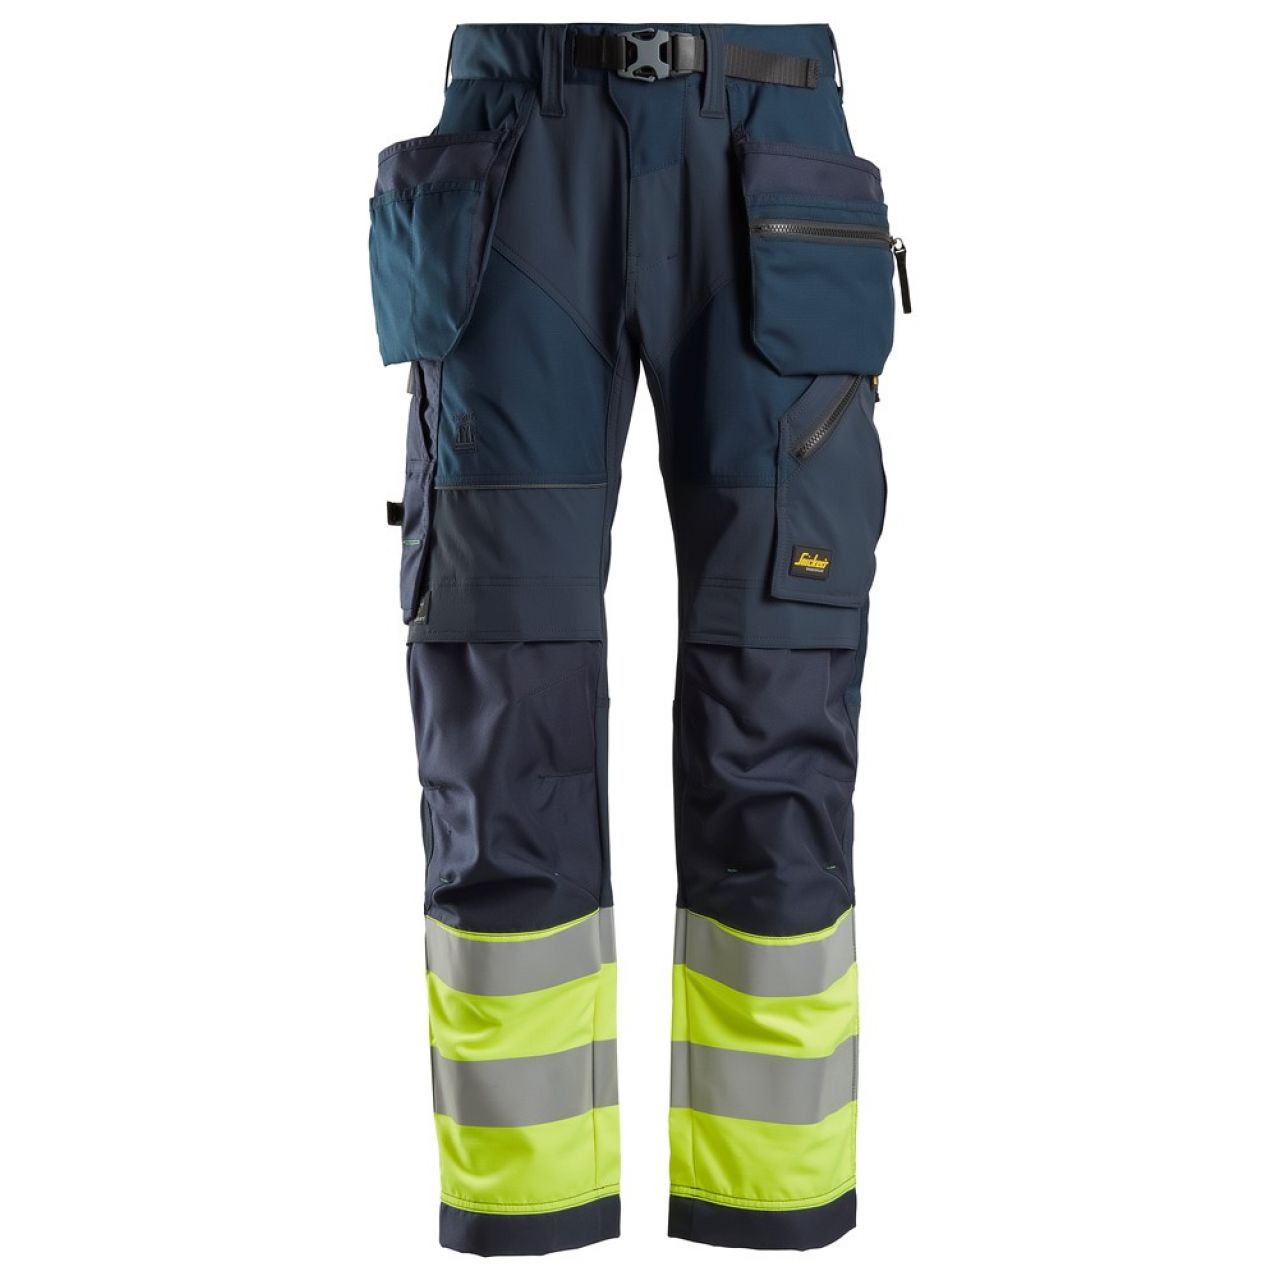 6931 Pantalones largos de trabajo de alta visibilidad clase 1 con bolsillos flotantes FlexiWork azul marino-amarillo talla 56